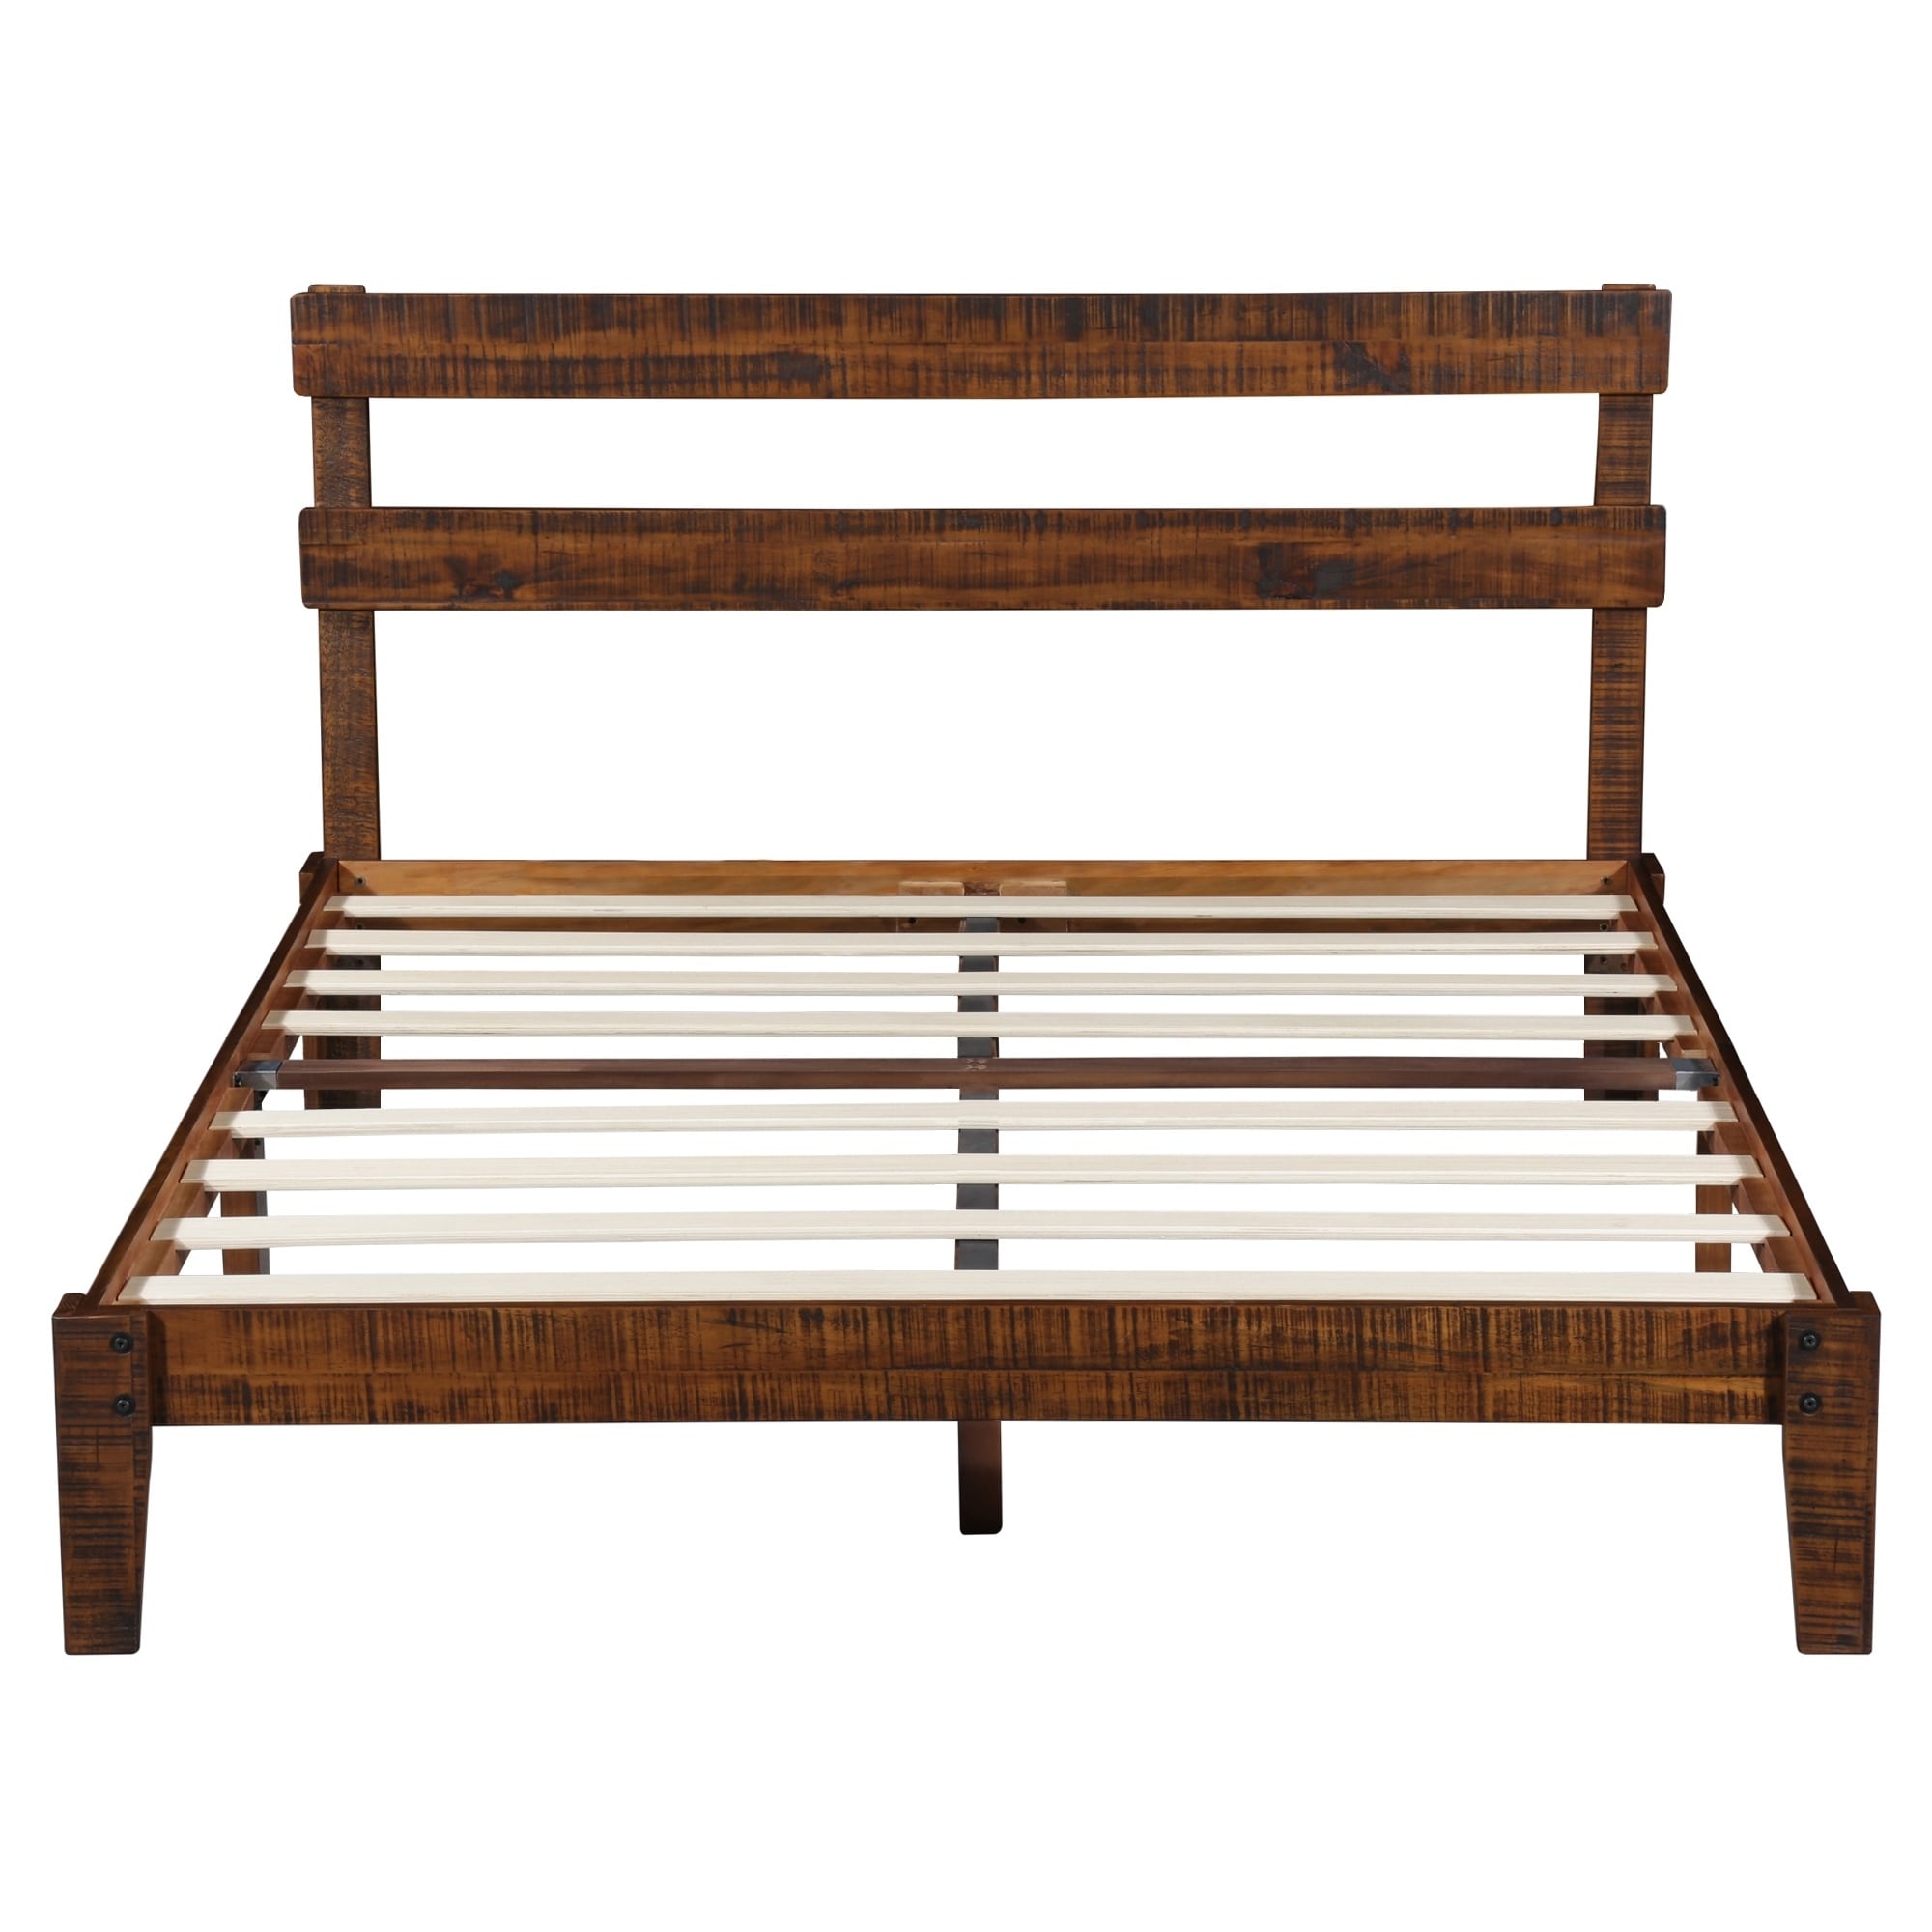 Sleeplanner Rustic Wood Platform Bed Frame With Headboard  No Box Spring Needed